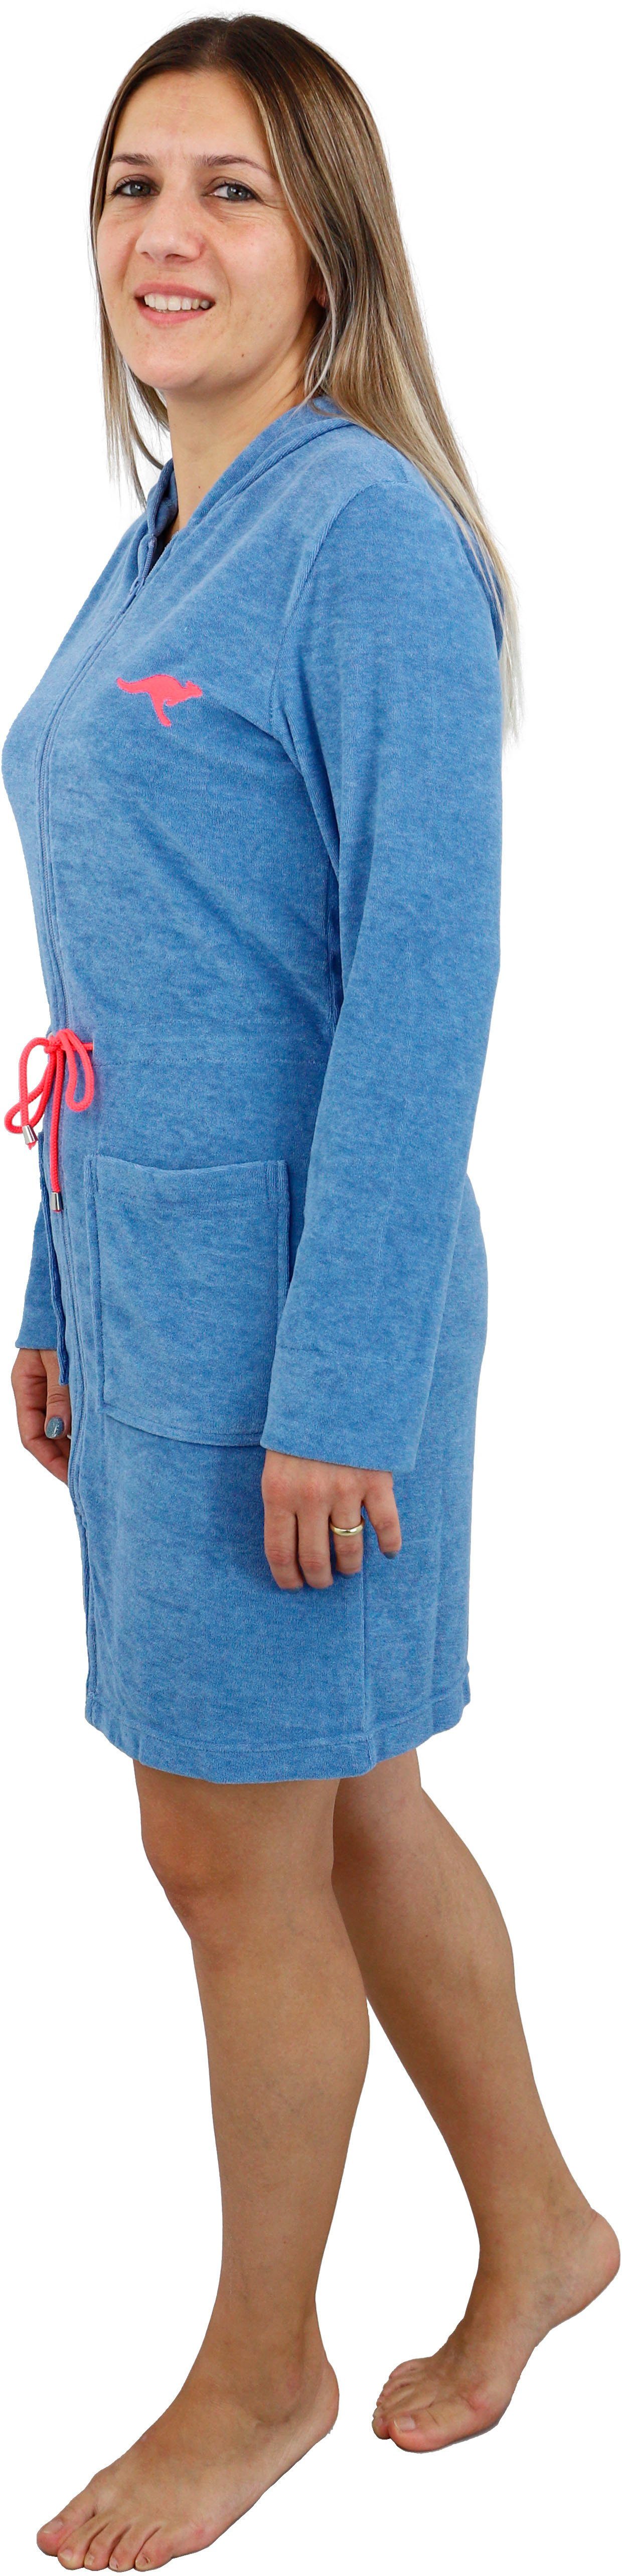 KangaROOS Damenbademantel Kira, Kurzform, kurz, Kapuze, melange Bademäntel Reißverschluss, mit XS-3XL blau Damen, für Bindekordel